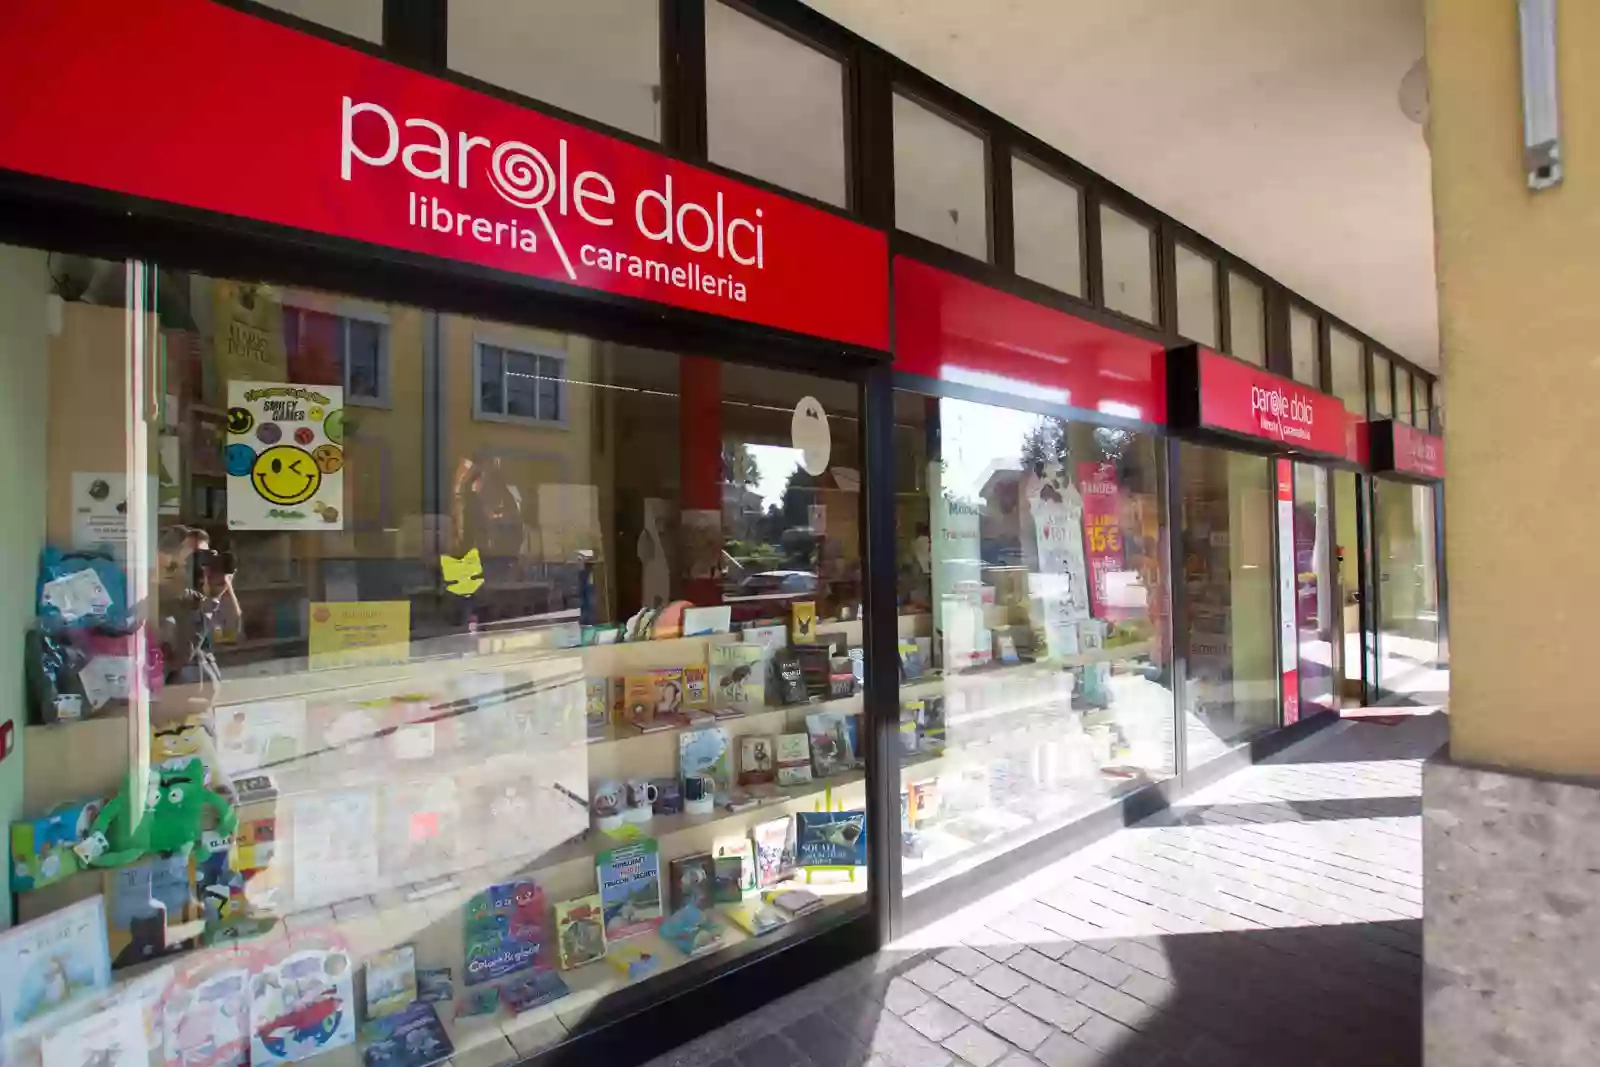 ParoleDolci - Libreria Caramelleria